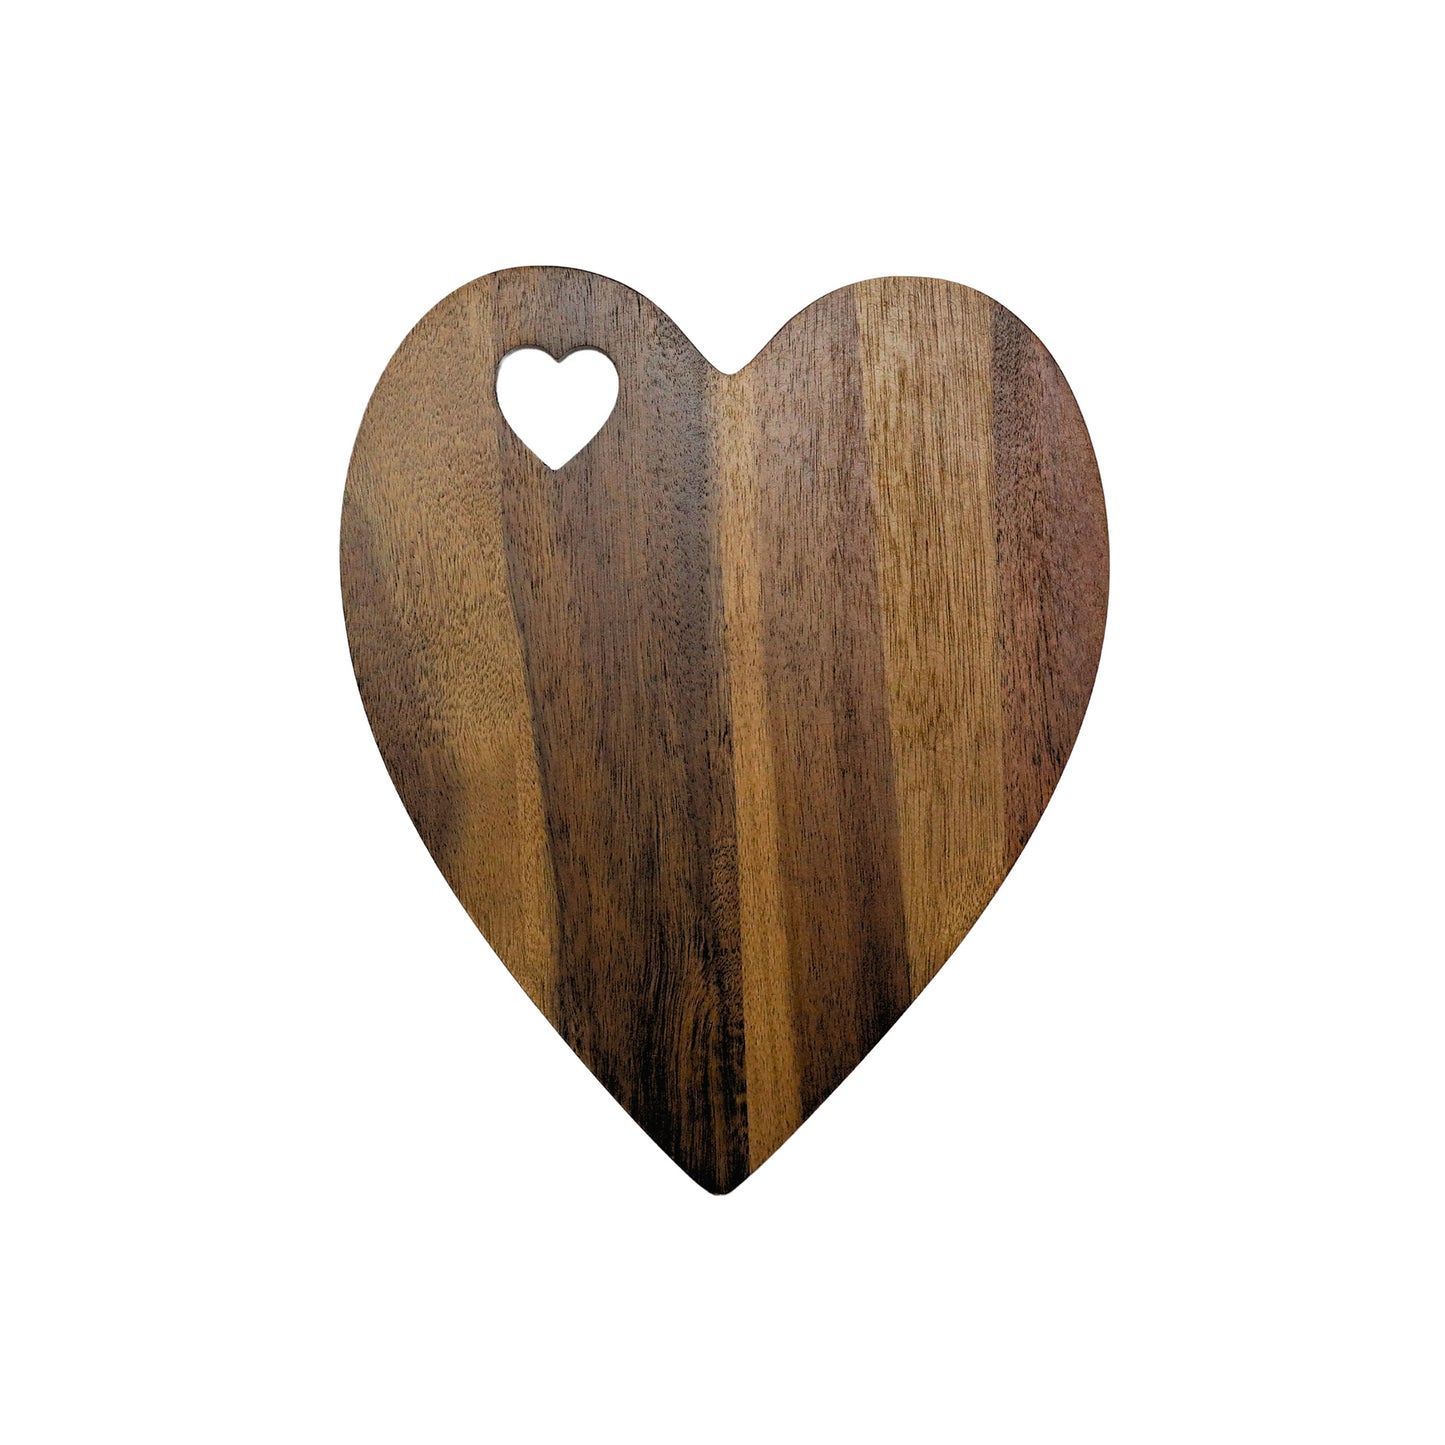 Heart Shaped Acacia Wood Board - 9.75" x 12"